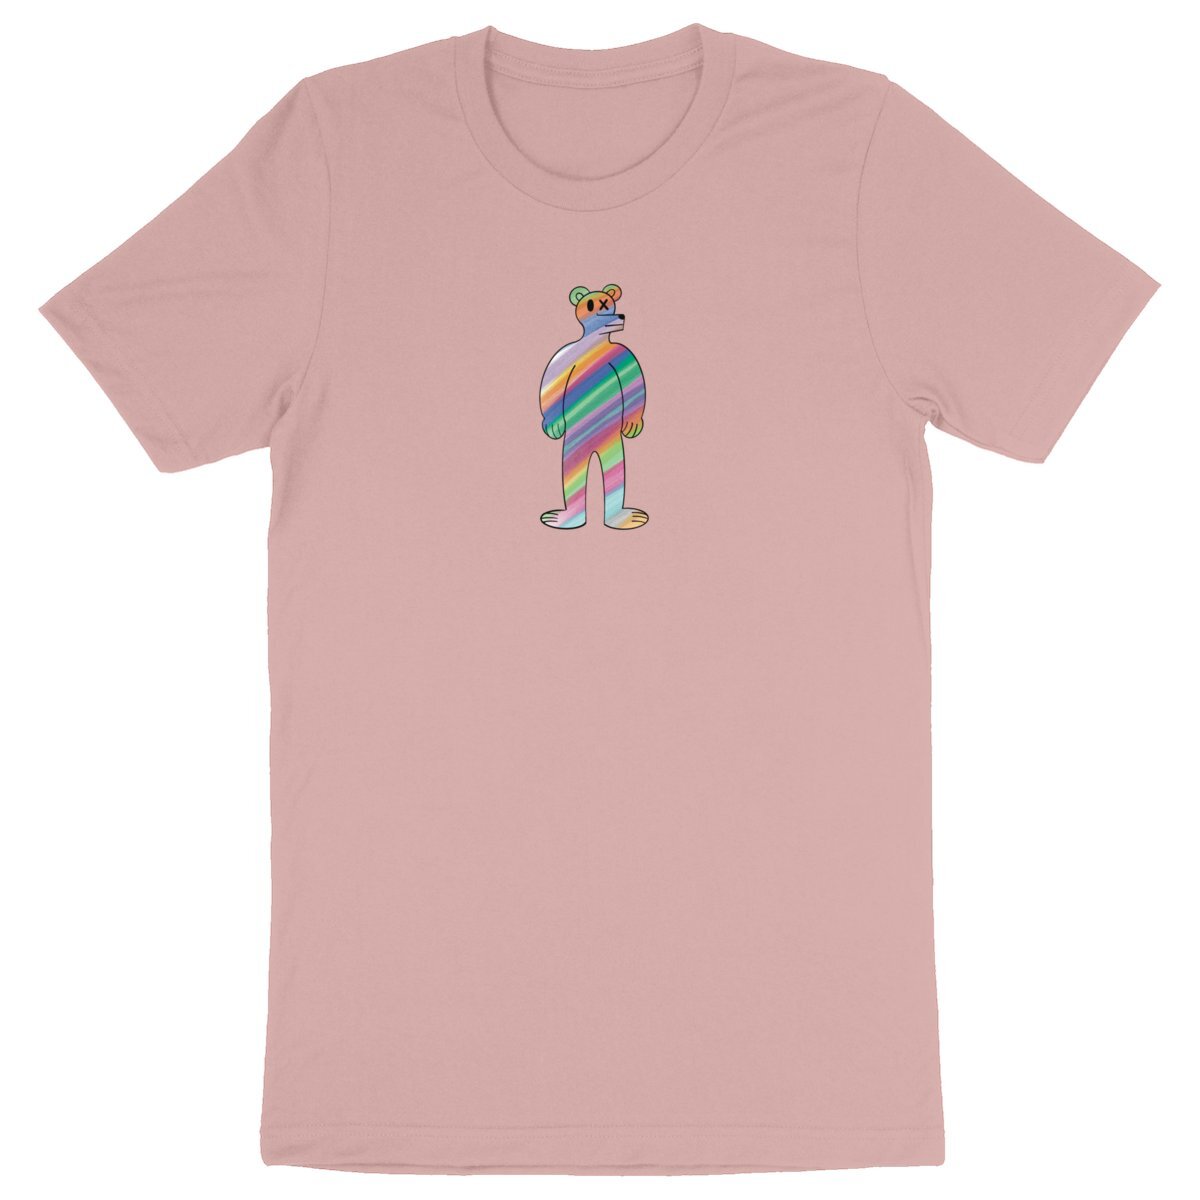 Rainbow Bear Graphic Tee